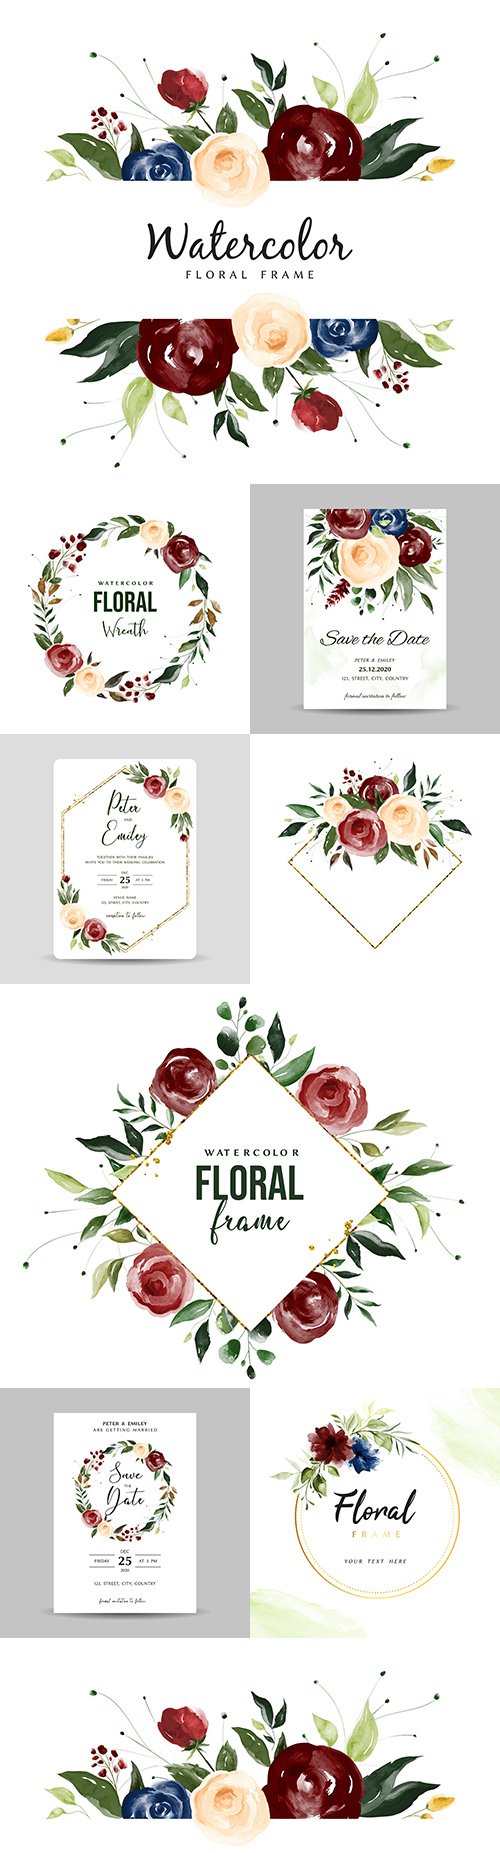 Watercolor flower frame for wedding invitation design